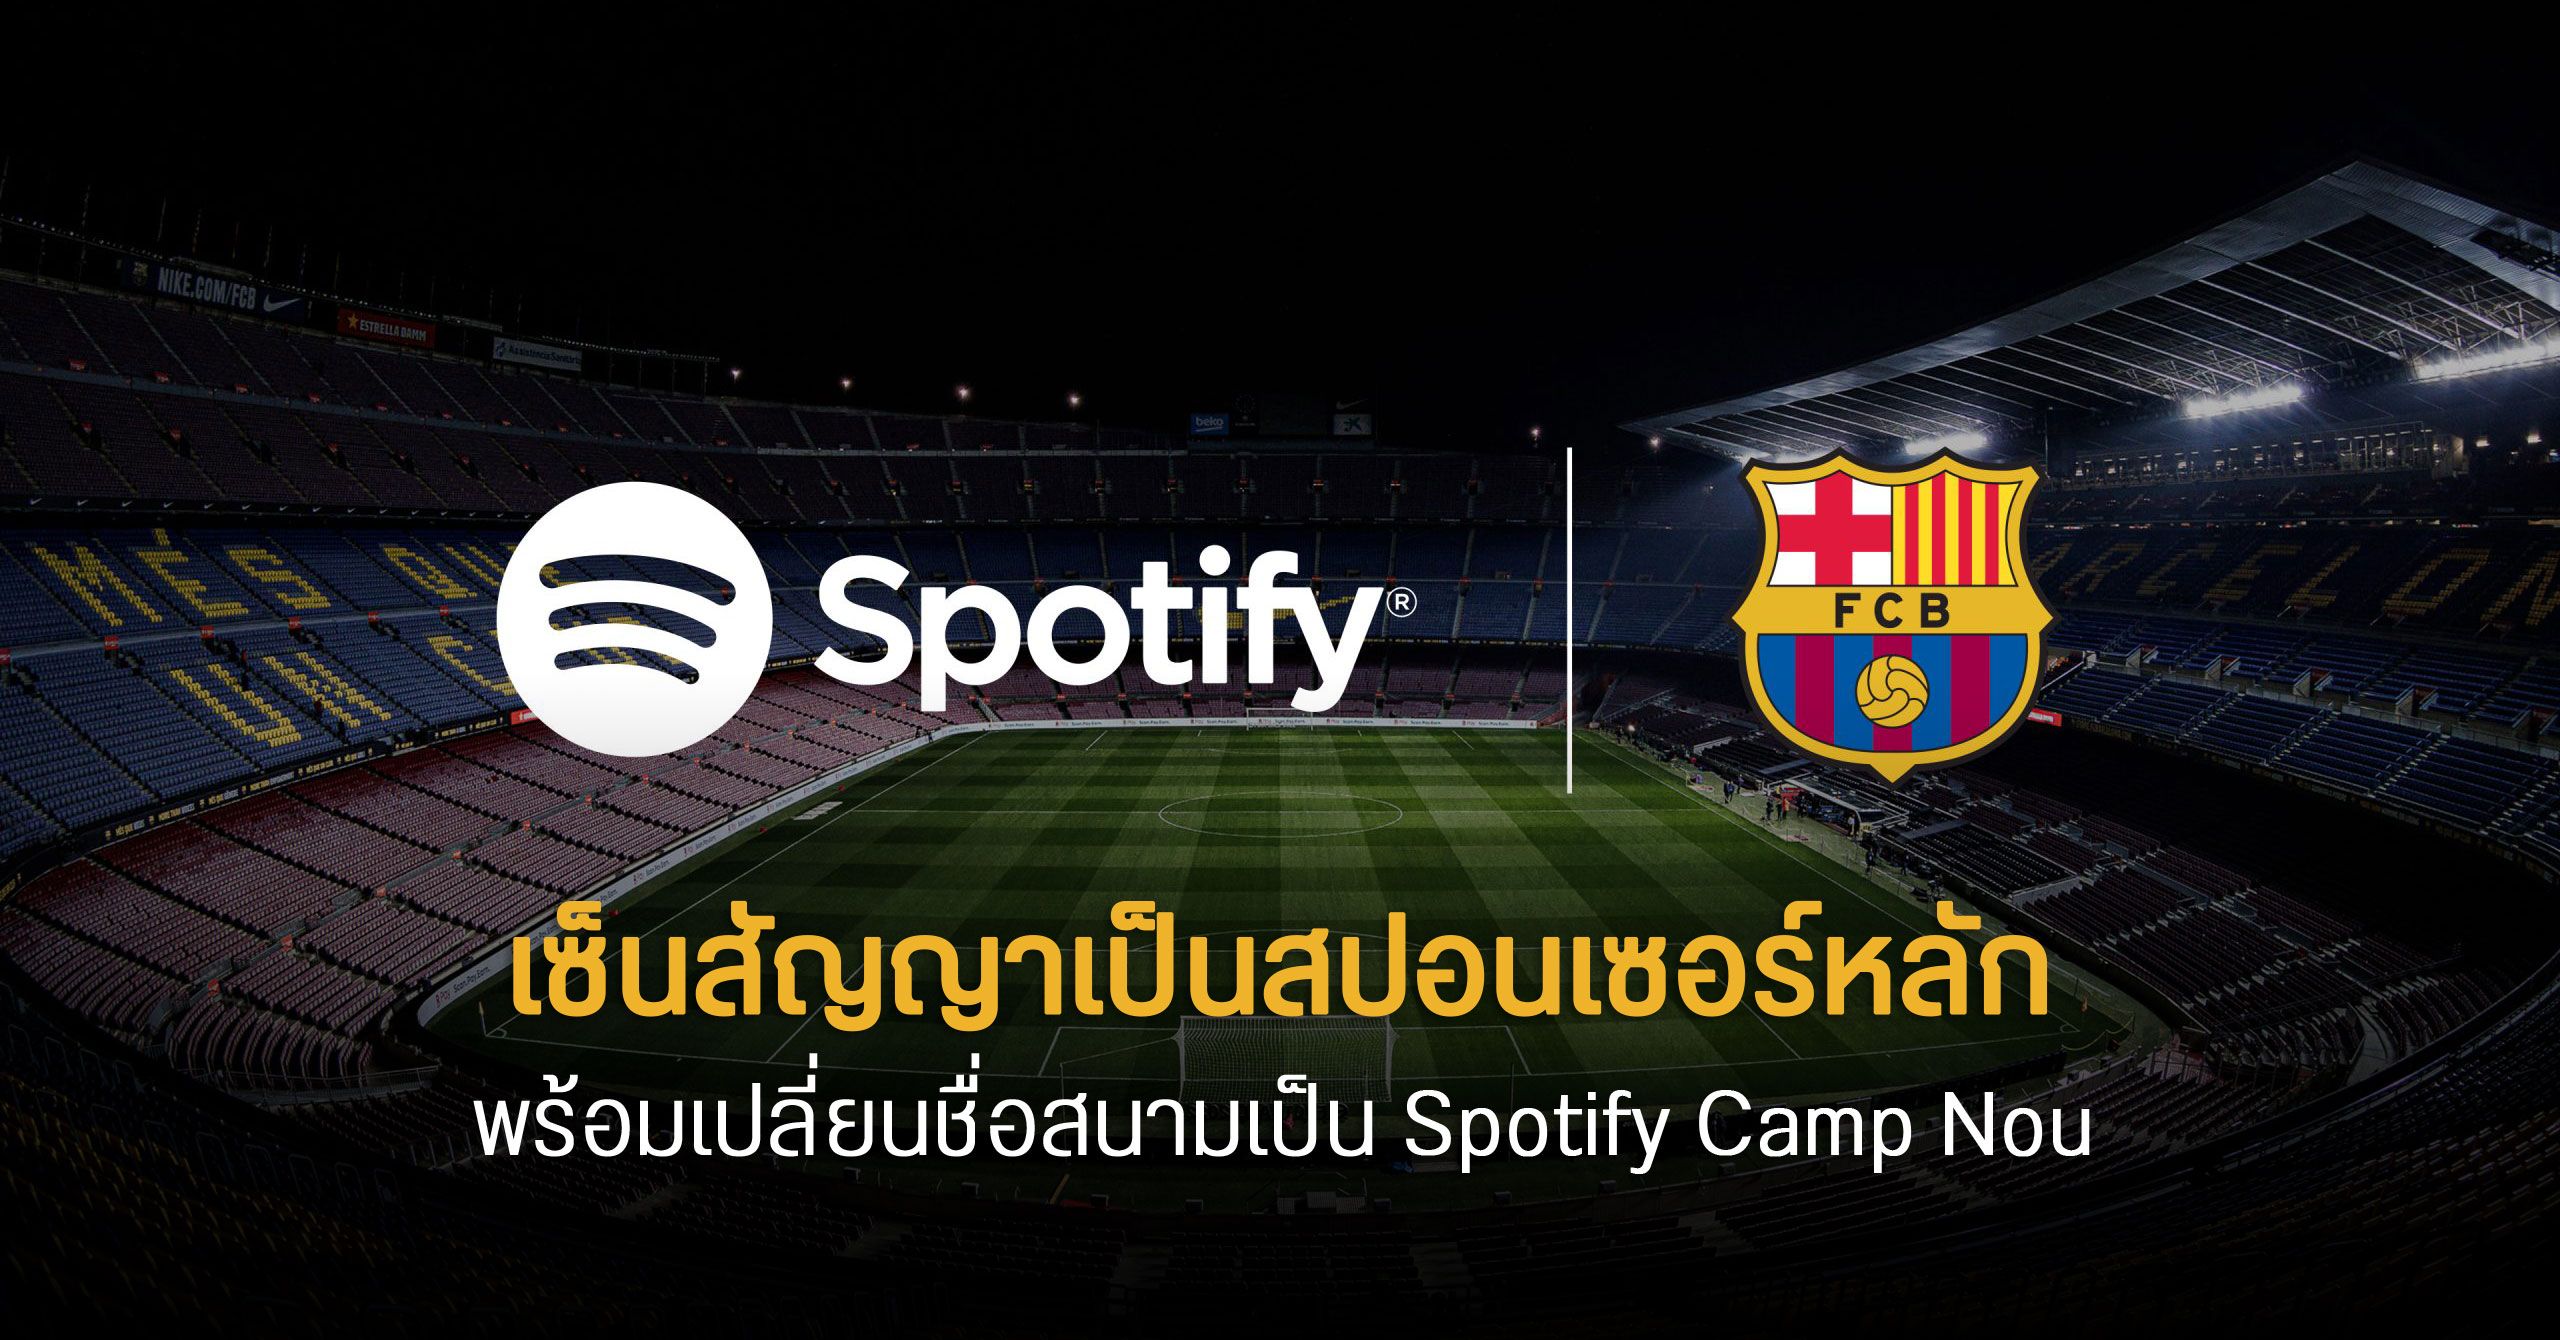 Spotify เซ็นสัญญากับ Barcelona แล้ว เตรียมเปลี่ยนชื่อสนามเป็น Spotify Camp Nou